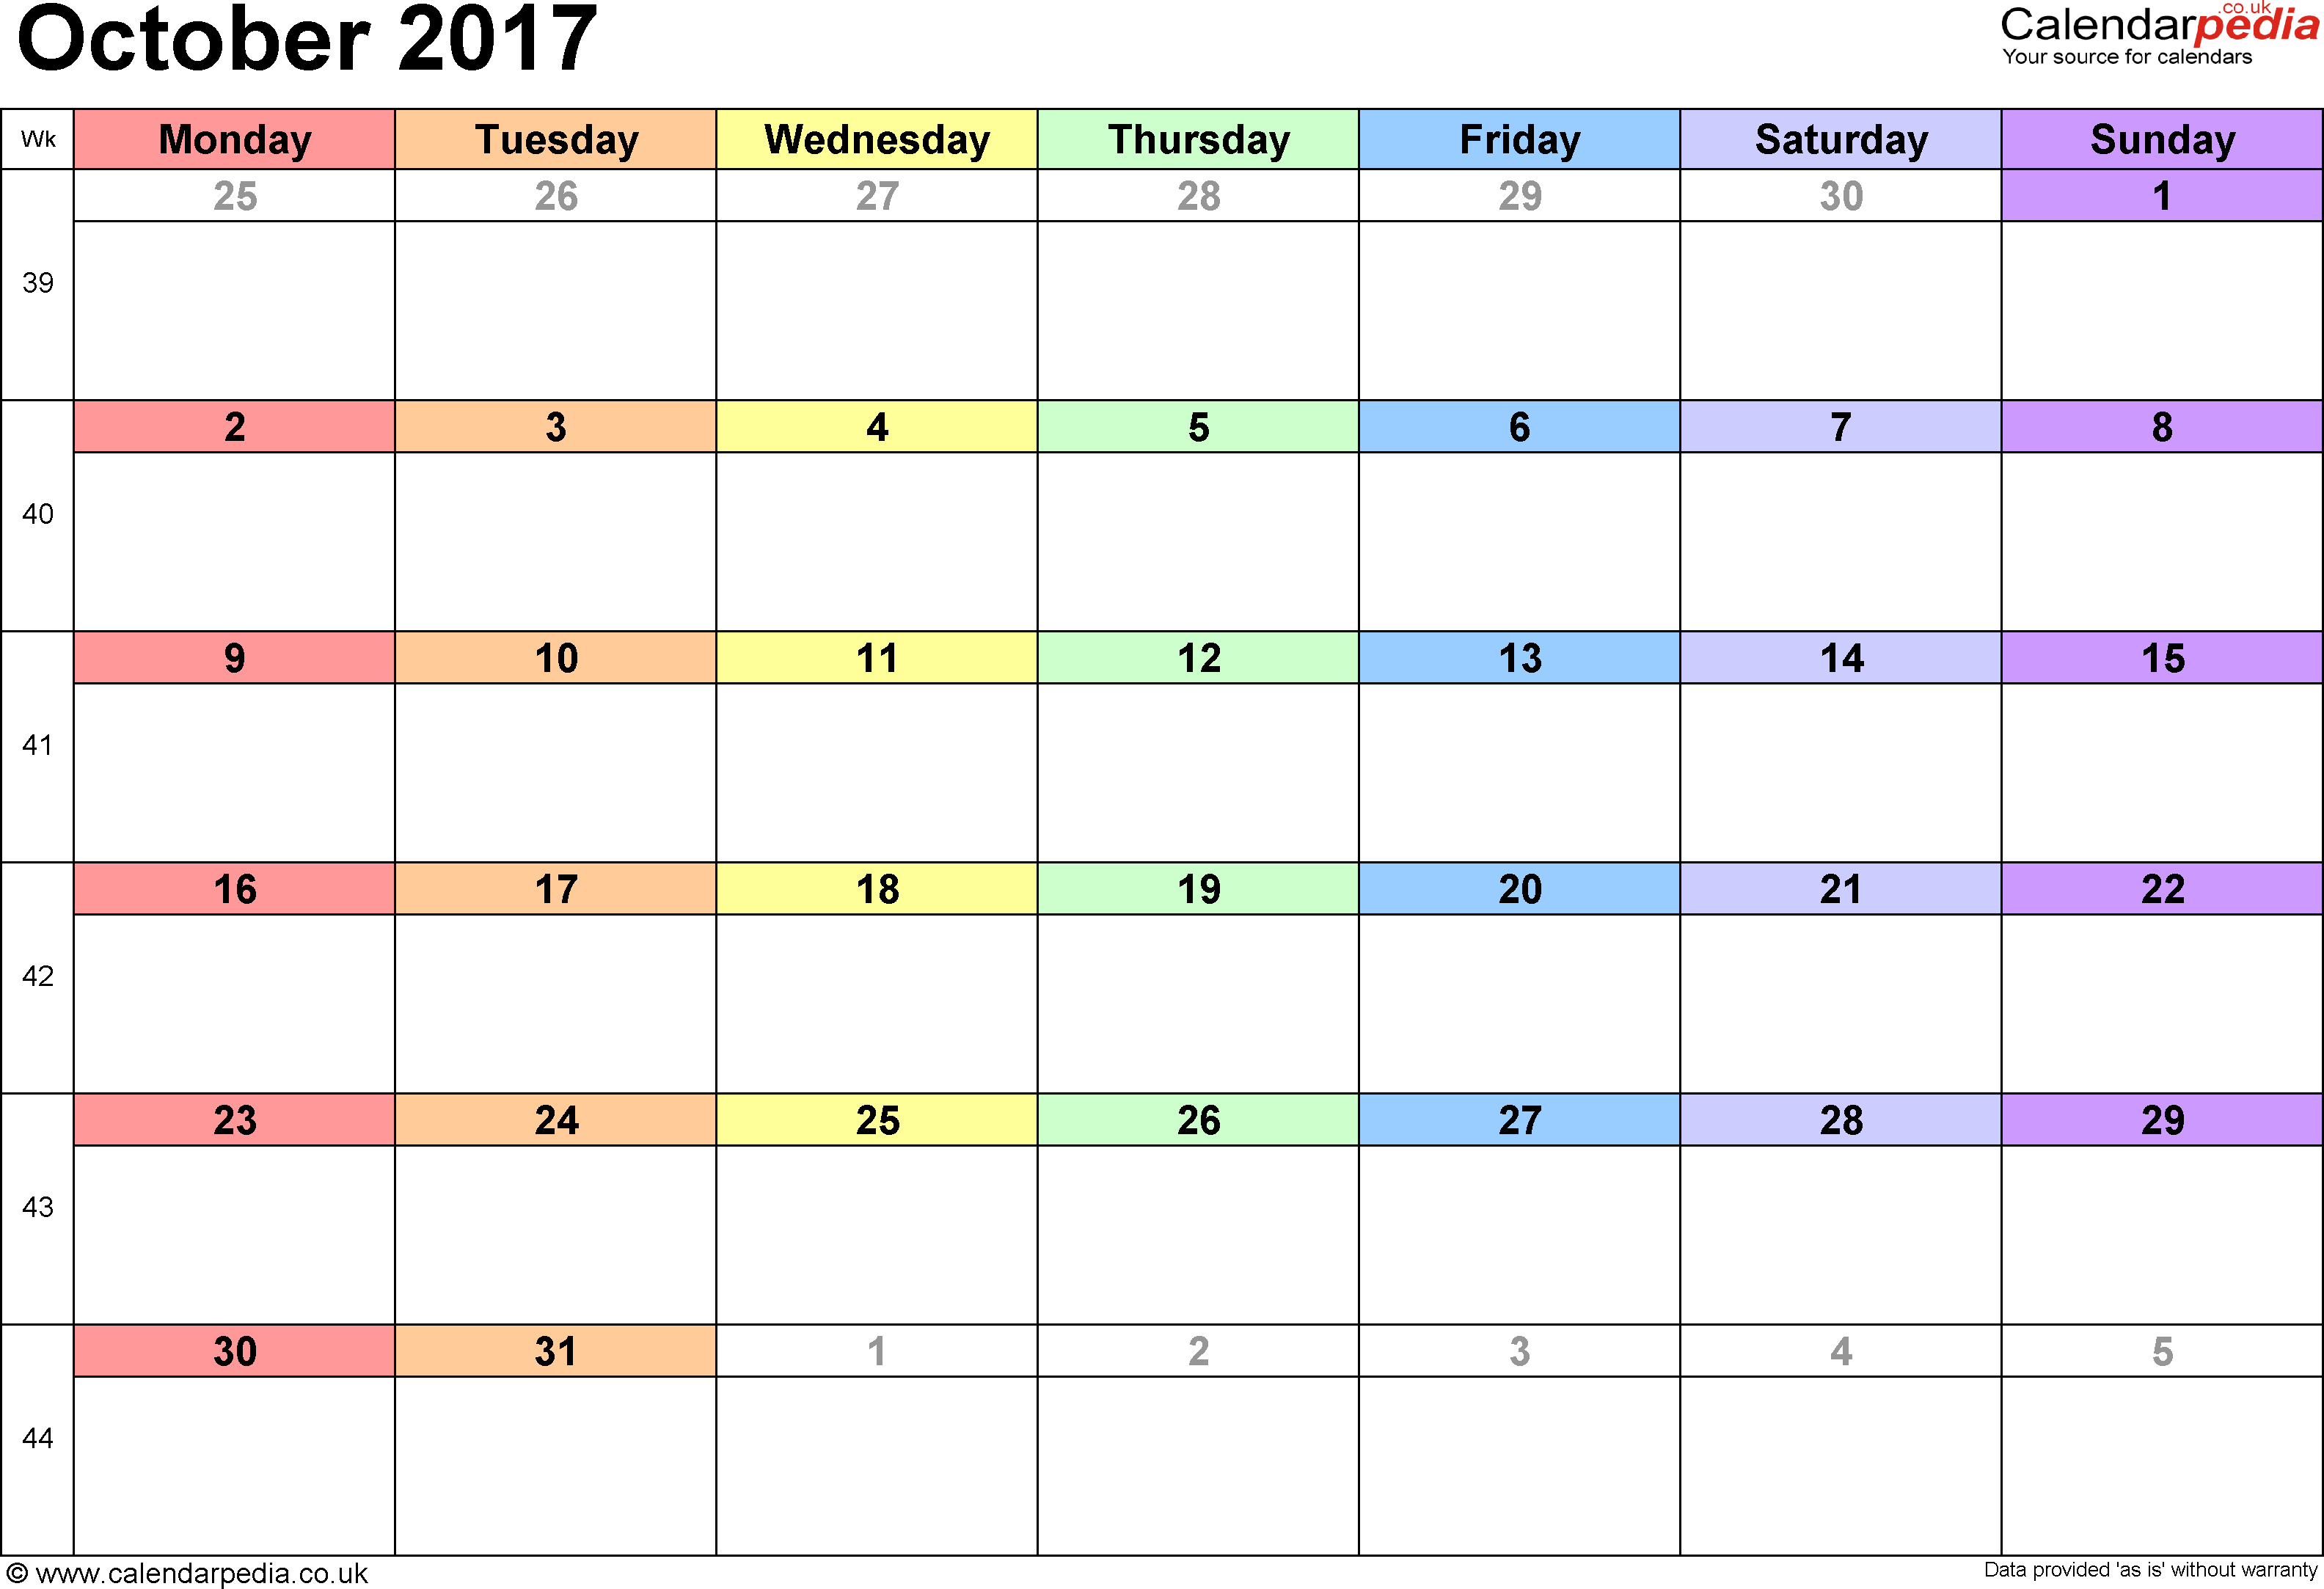 October 2017 Calendar Cute | weekly calendar template